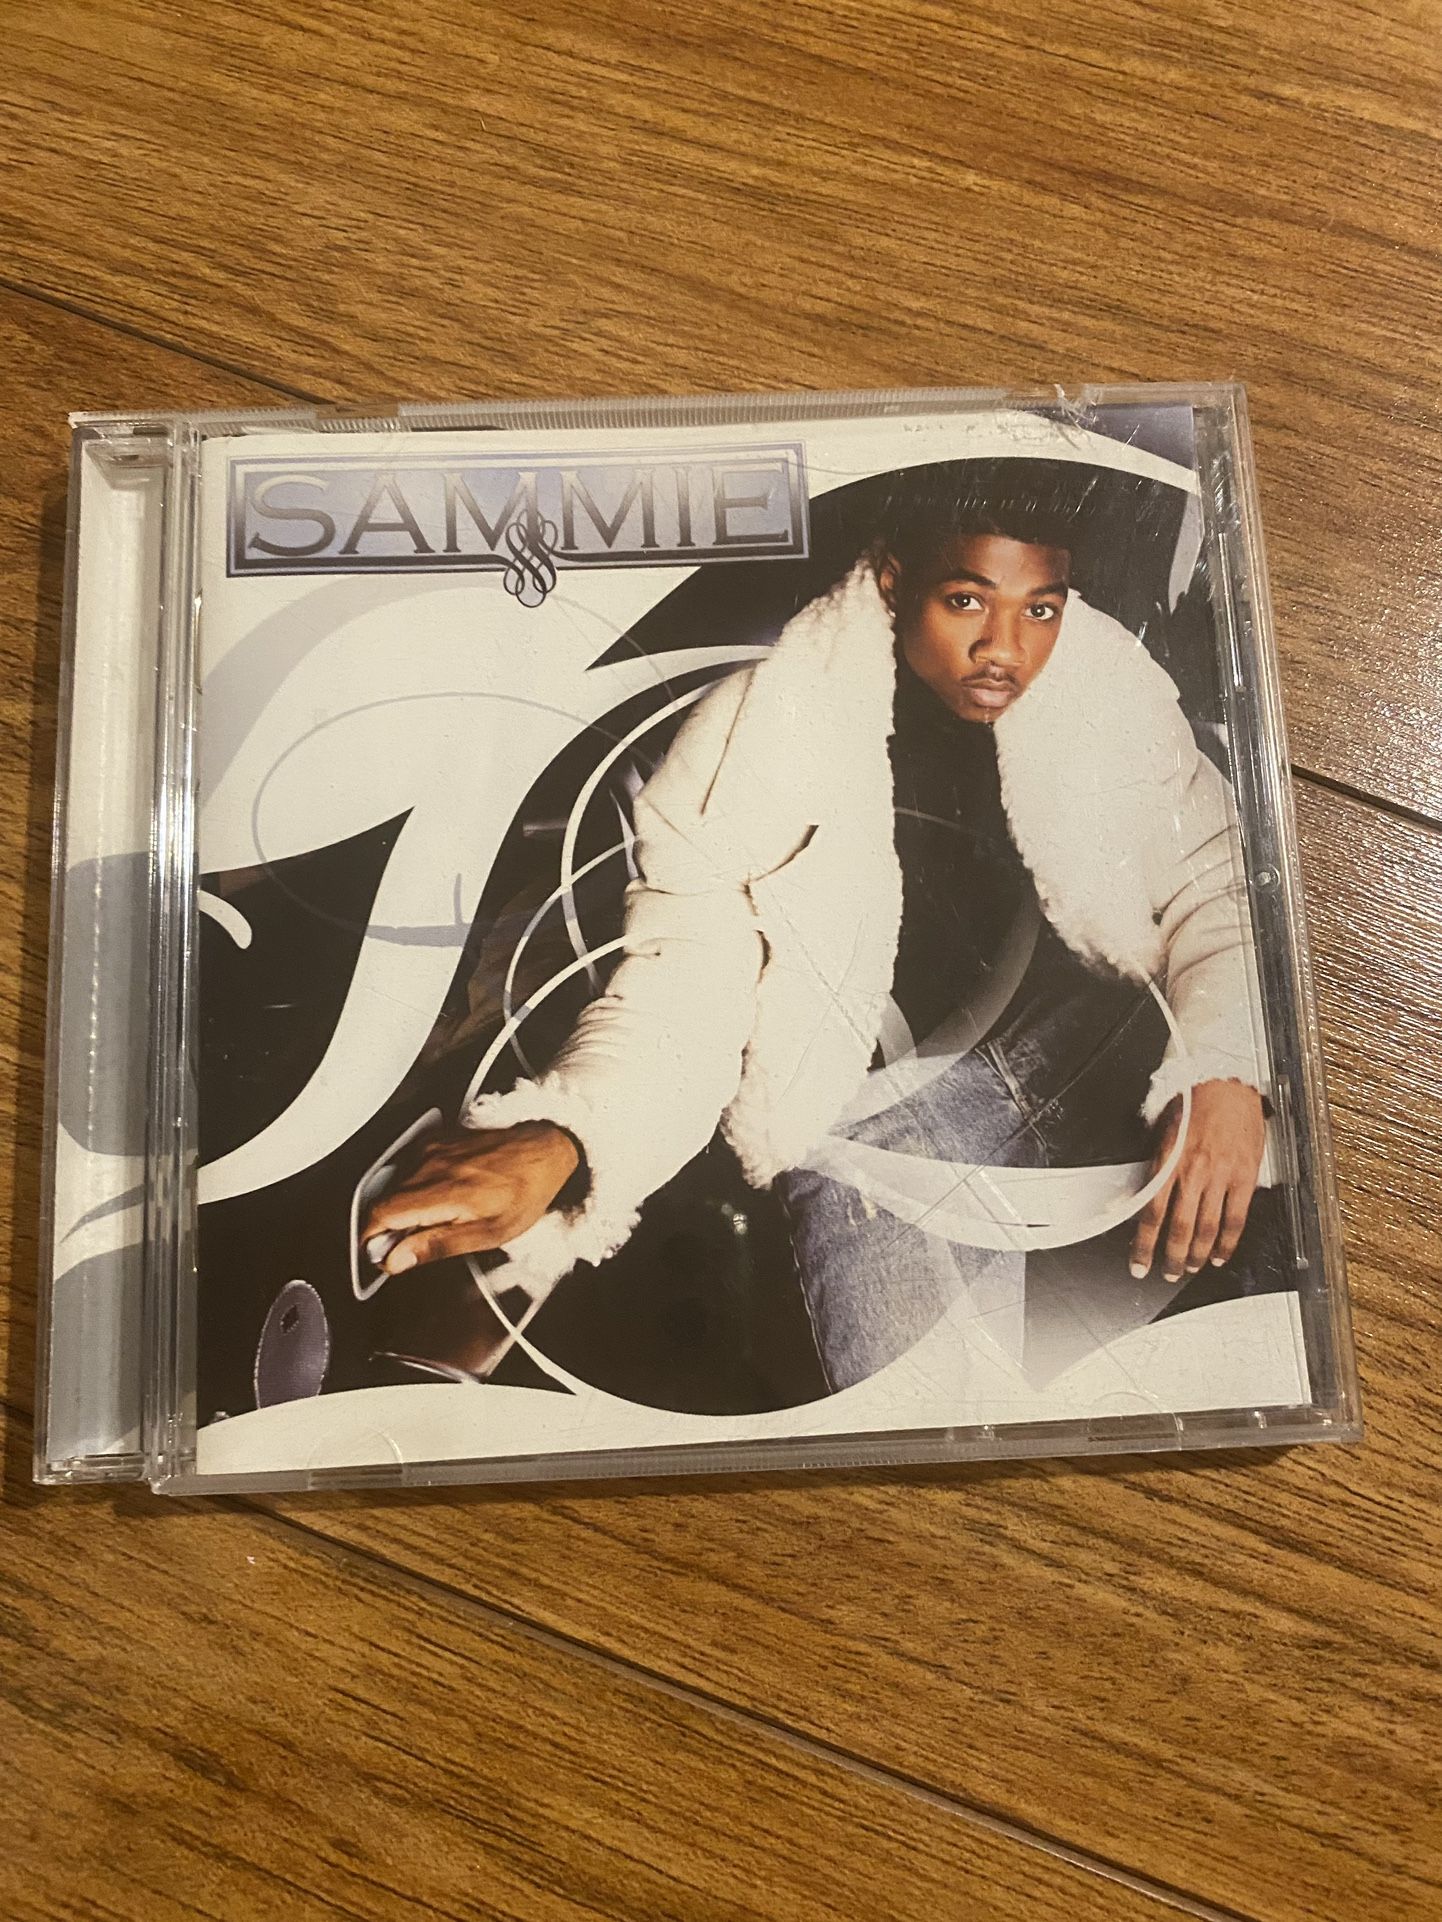 Sammie by Sammie (CD, Oct-2006, Rowdy) Broken Case CD Like New Youngbloodz